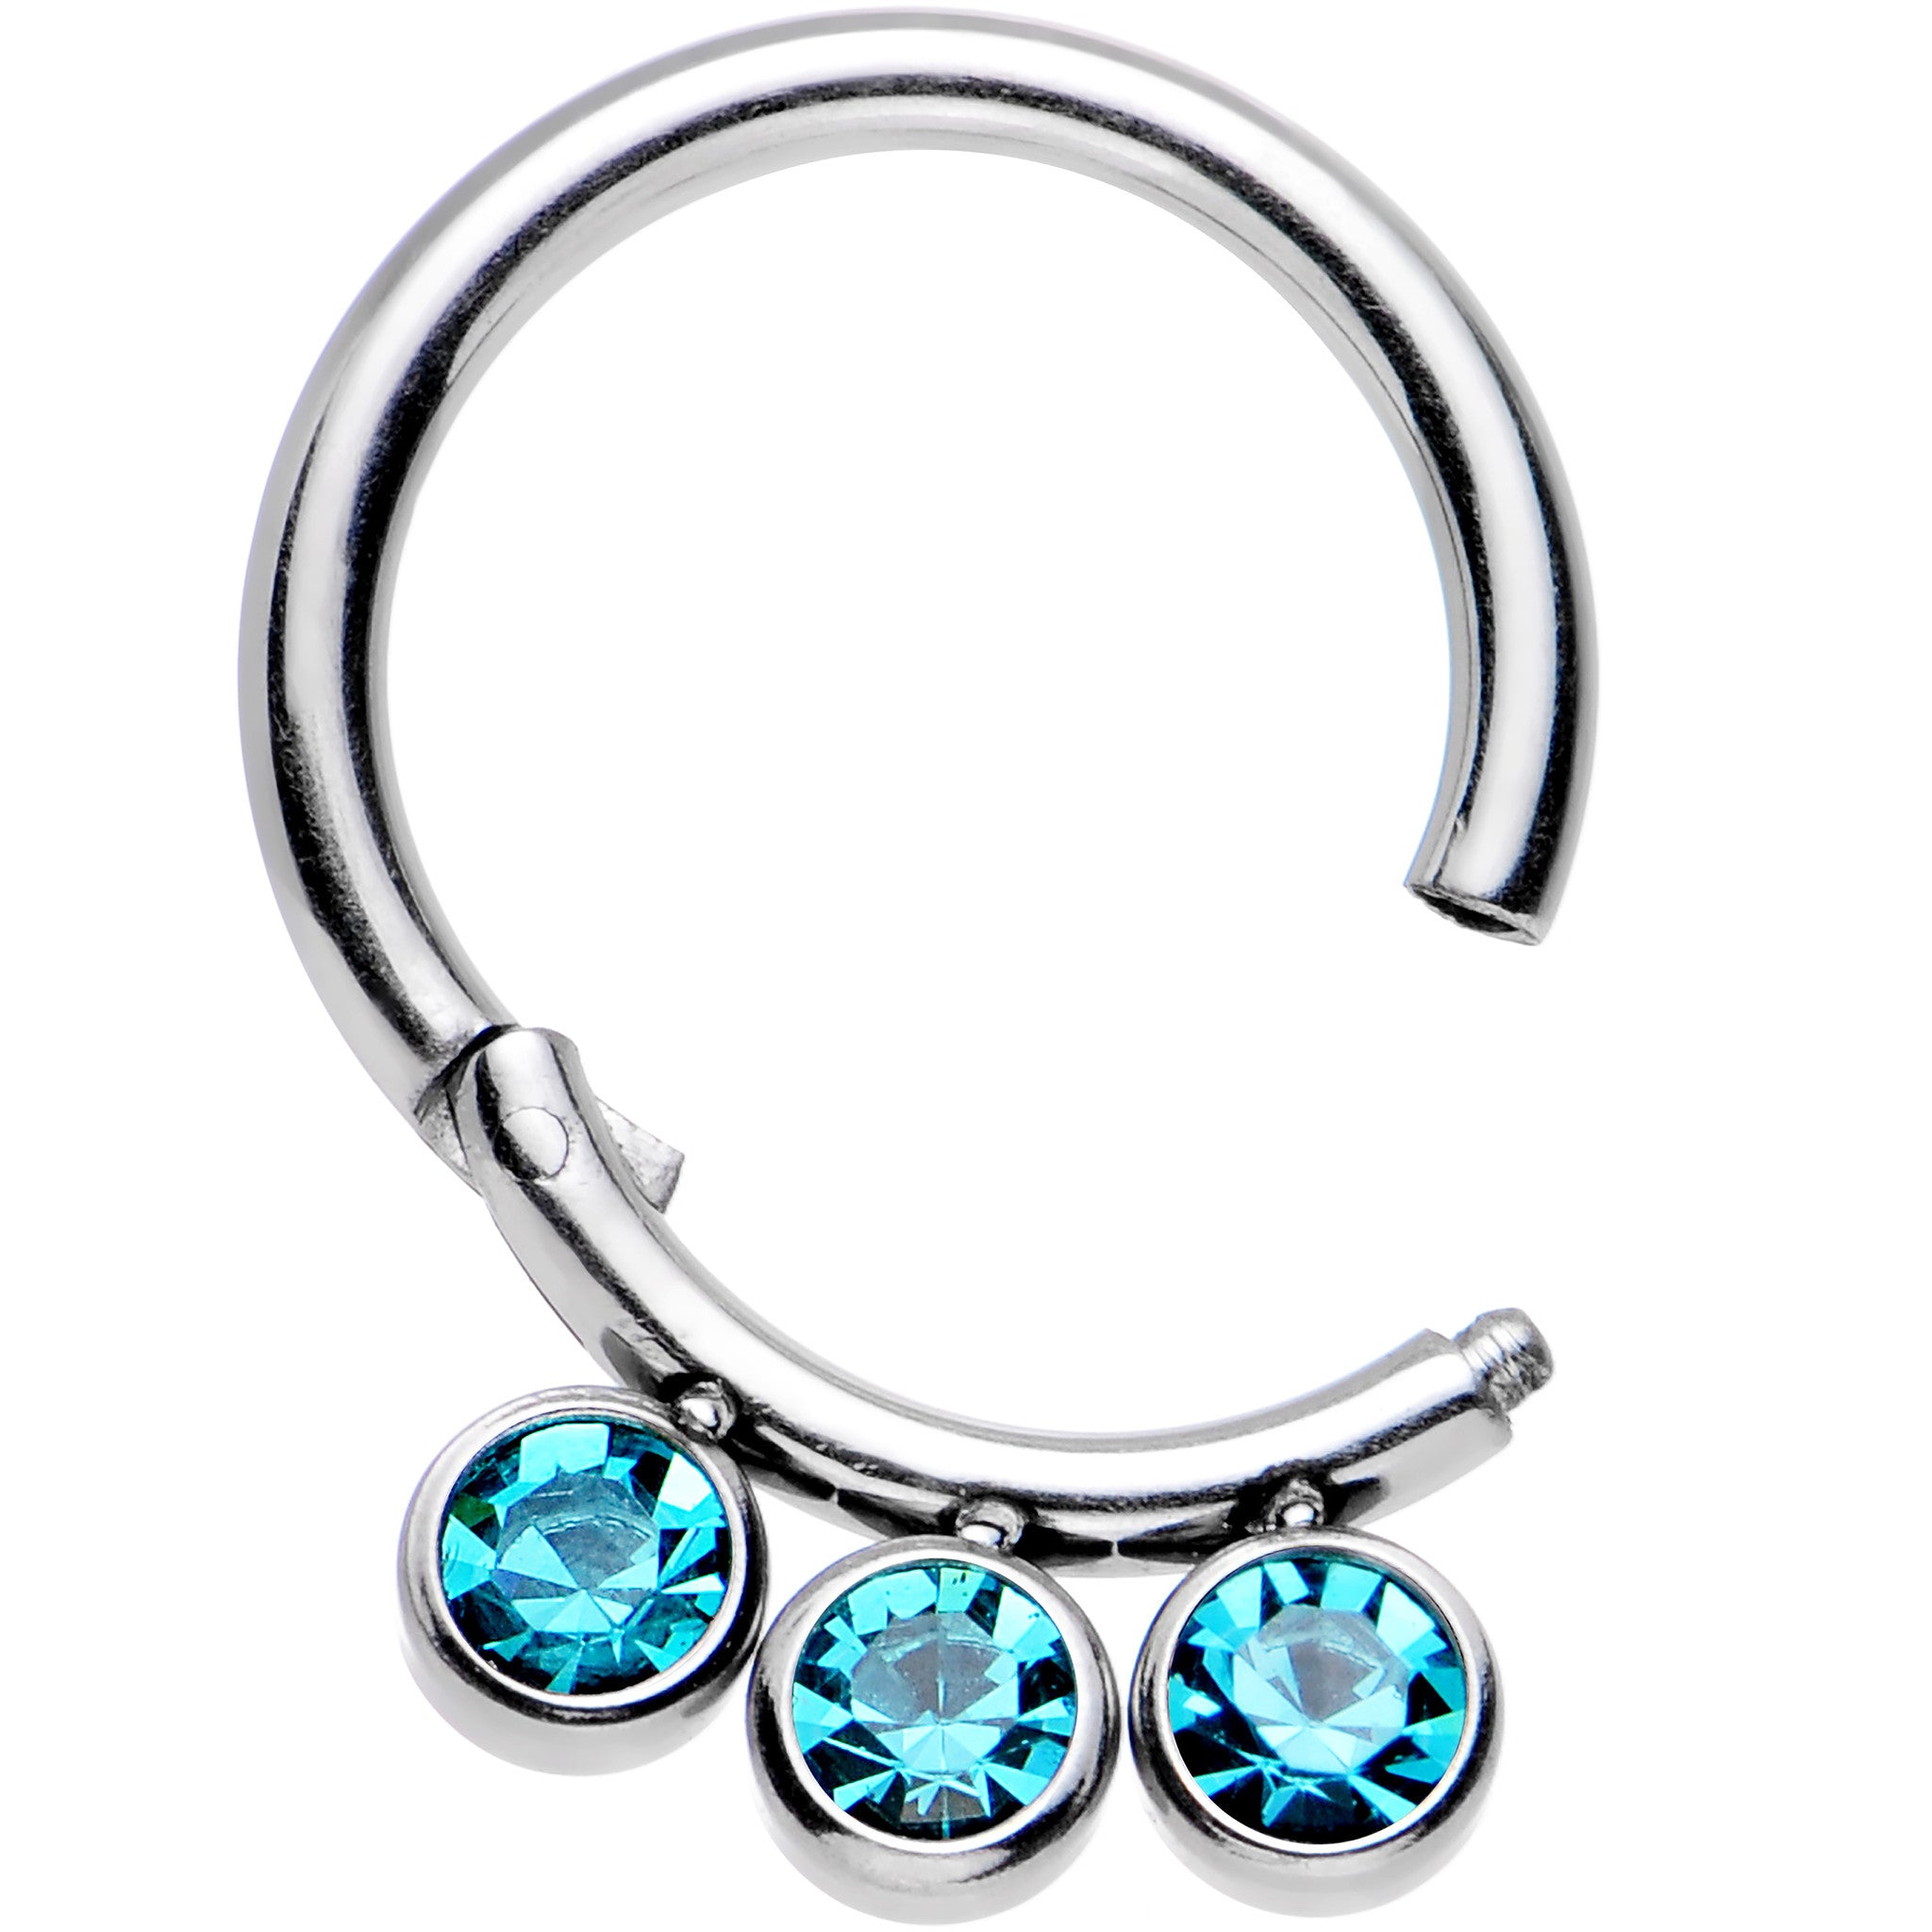 16 Gauge 5/16 Blue Zircon Gem Stainless Steel Hinged Segment Ring